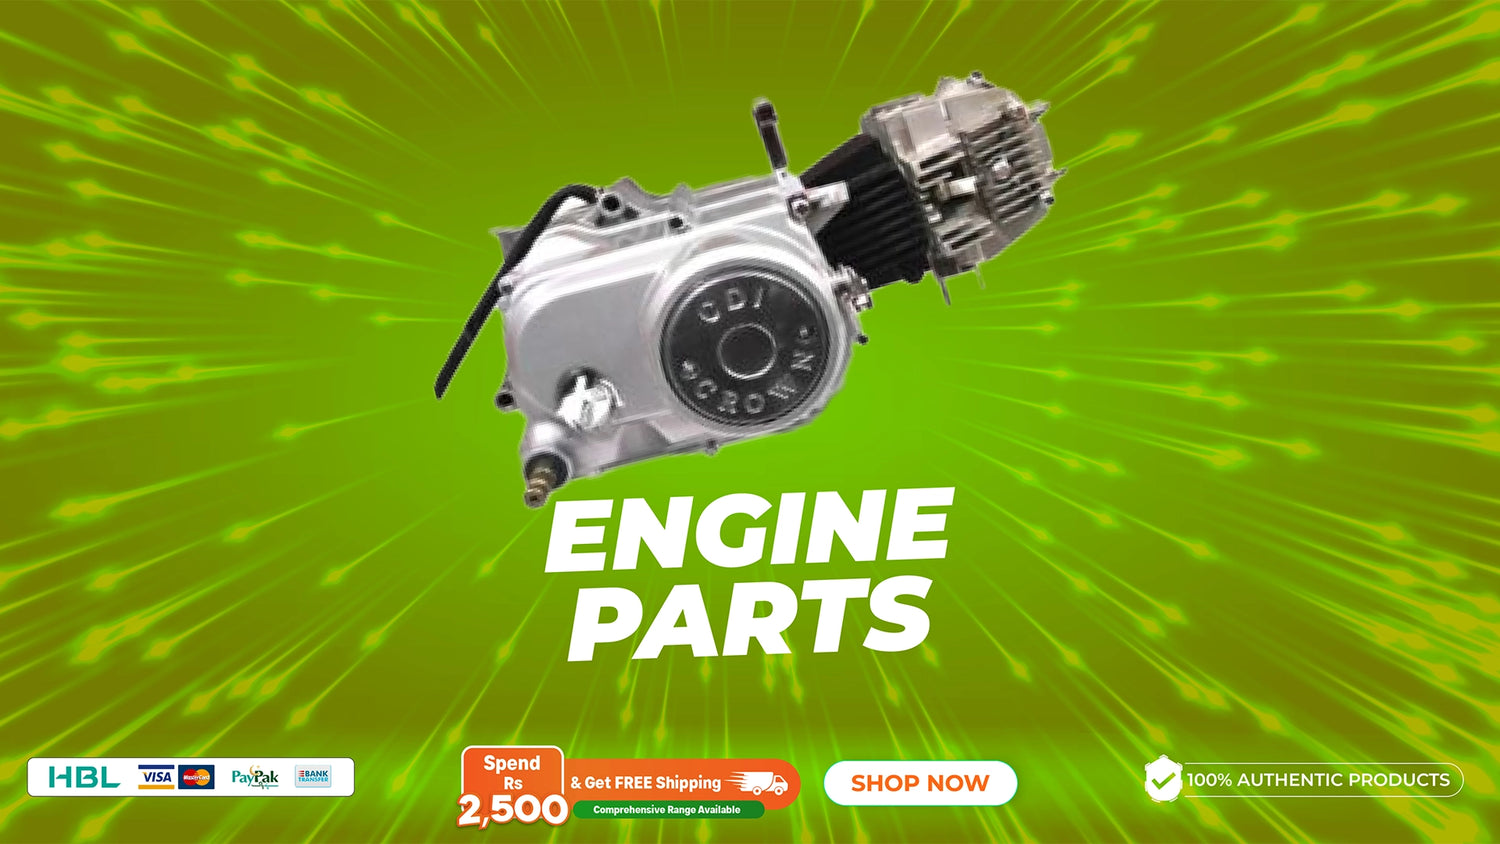 Crown Motorcycle Engine Parts